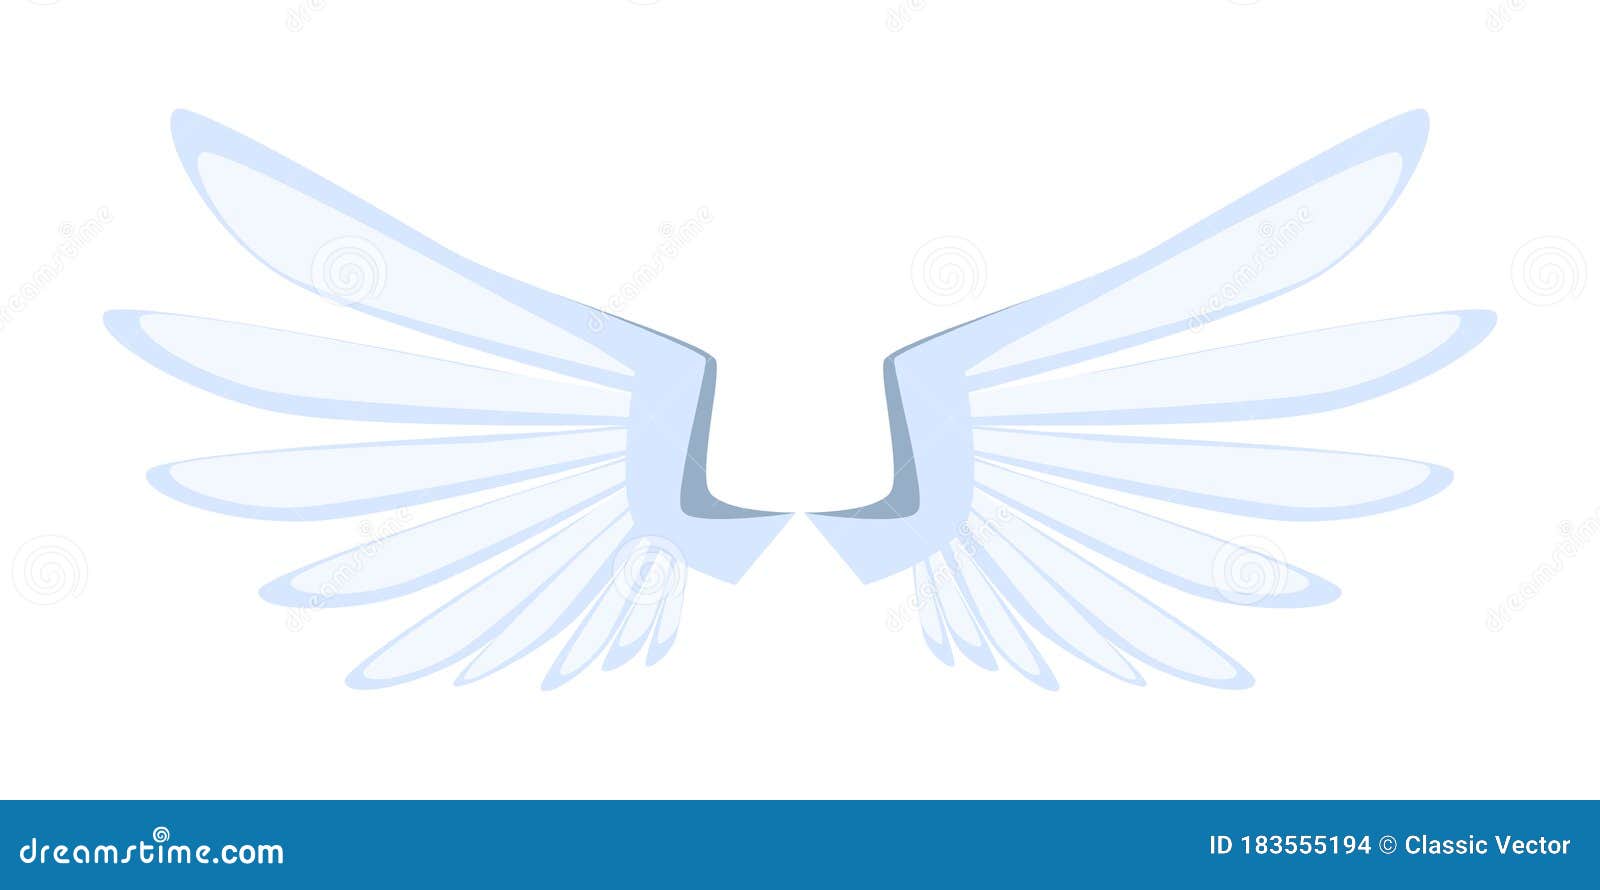 Cartoon White Eagle Wings Knight Item Isolated Stock Vector - Illustration  of bird, chivalry: 183555194